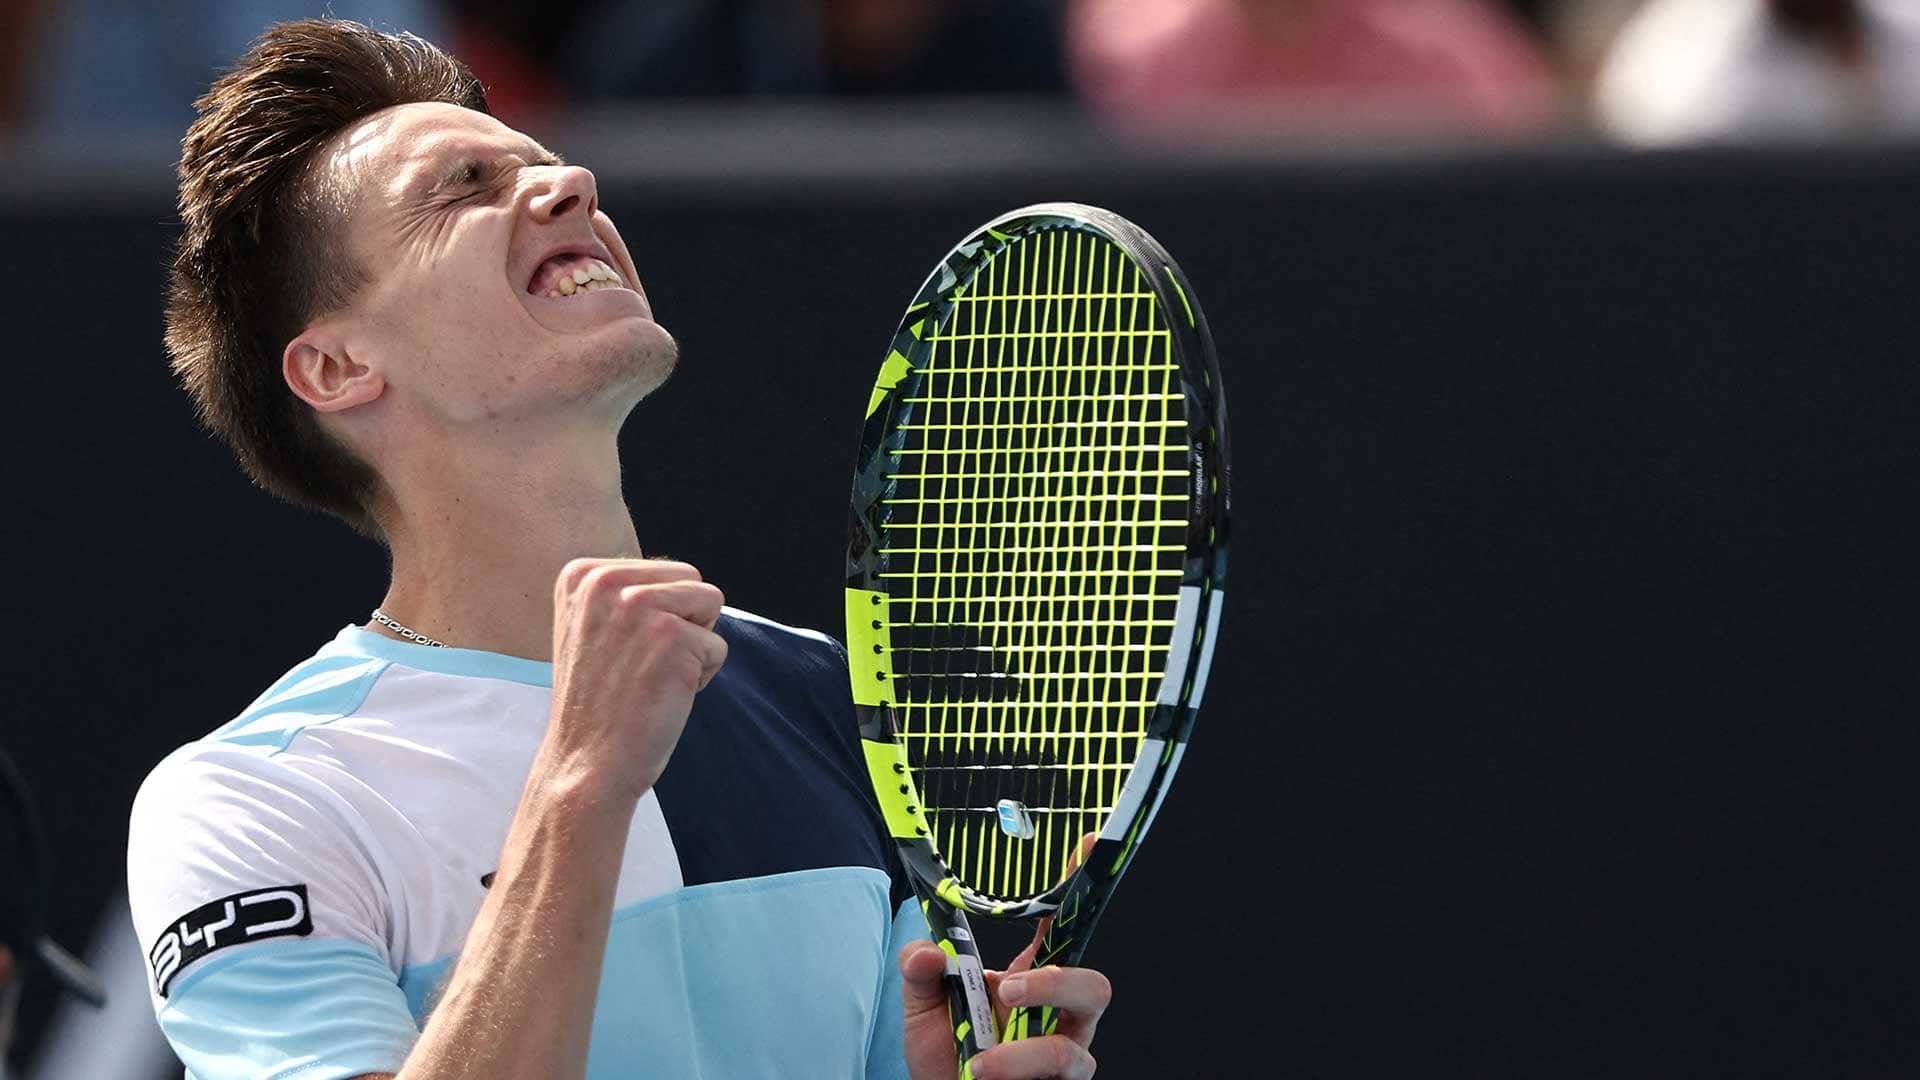 Fabian Marozsan, who beat Carlos Alcaraz last season, is making his Australian Open debut.